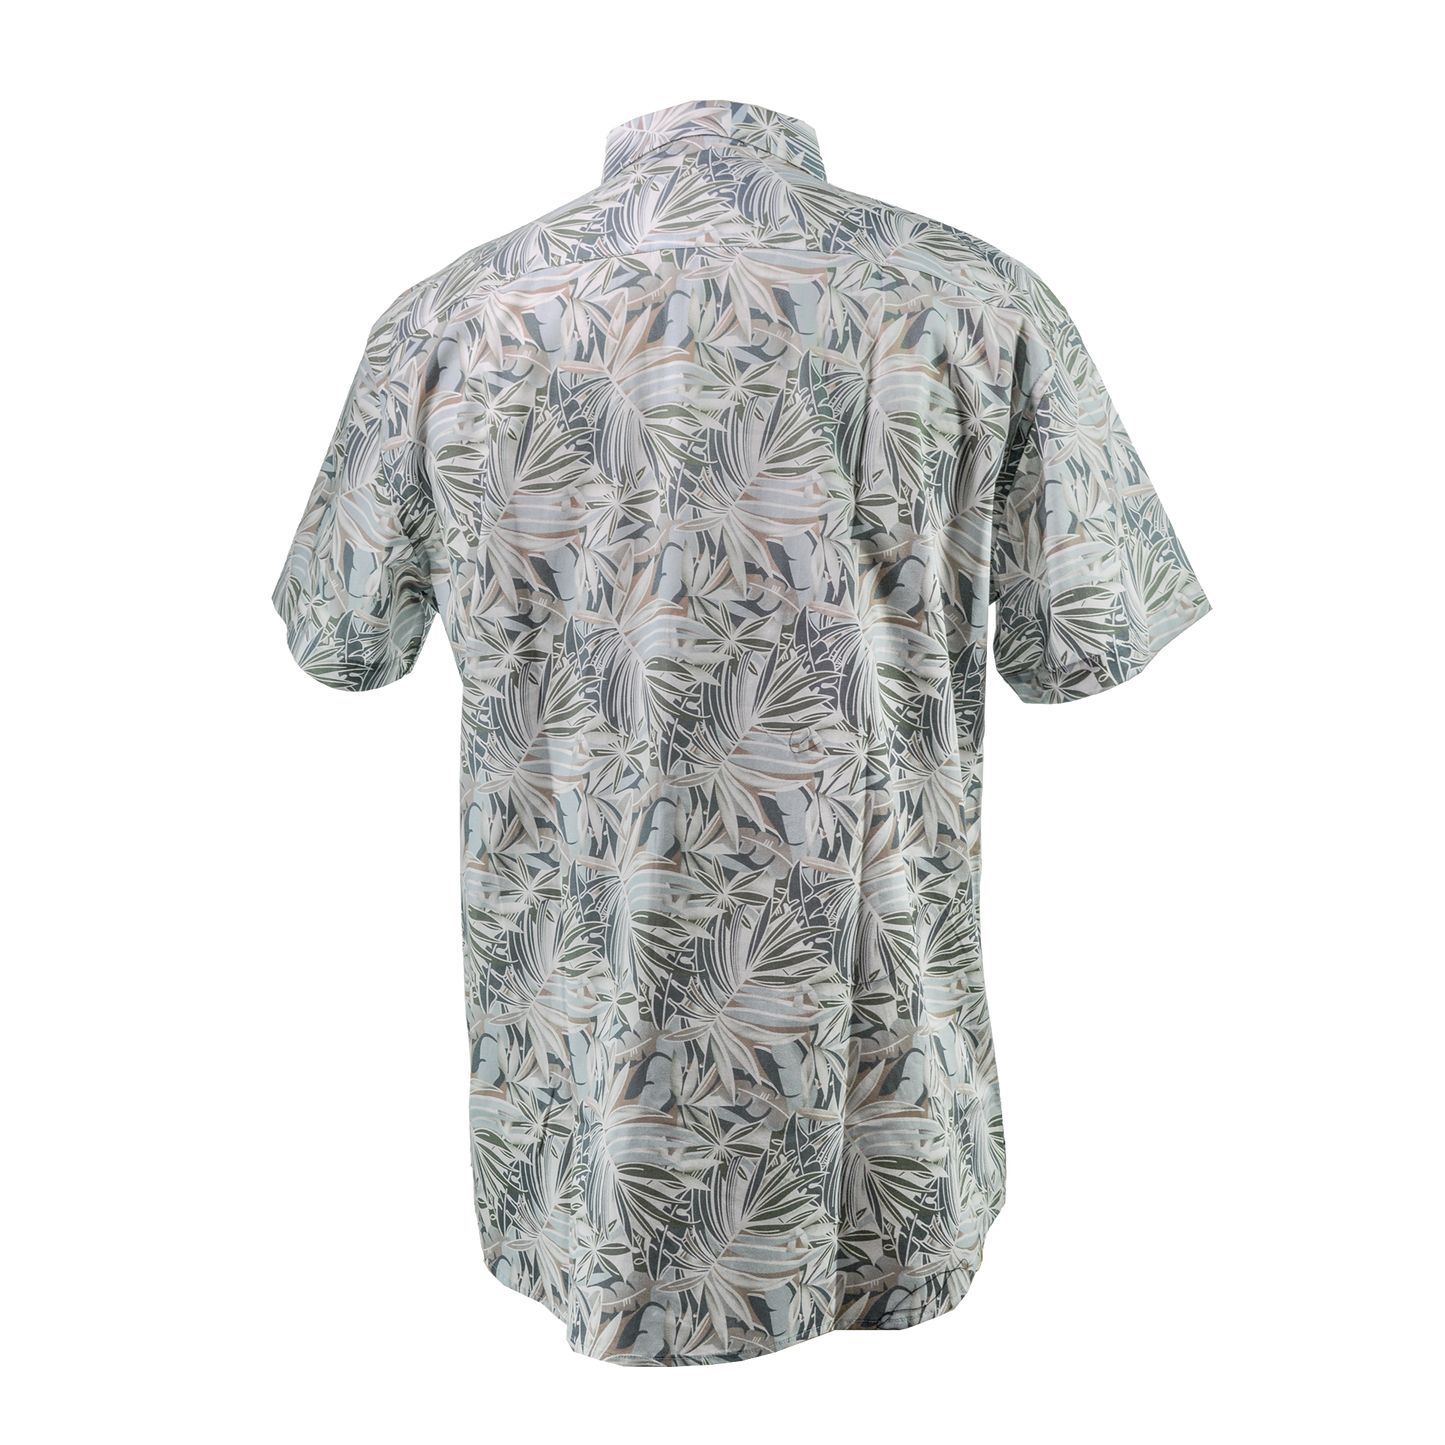 Men's Hawaiian Vintage Shirt, Floral Leaves